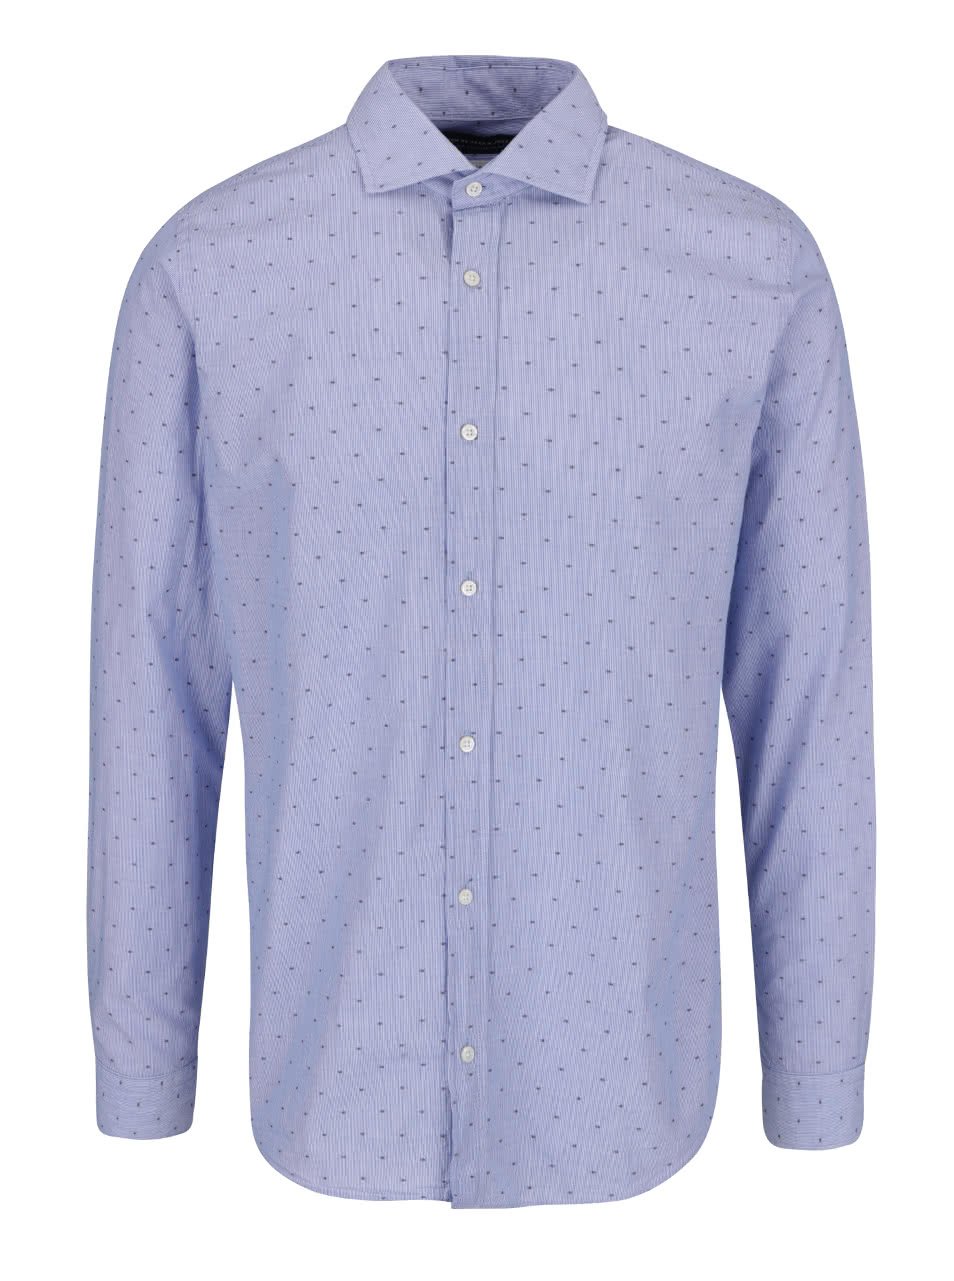 Šedo-modrá slim fit košile s jemným vzorem Jack & Jones Ethan